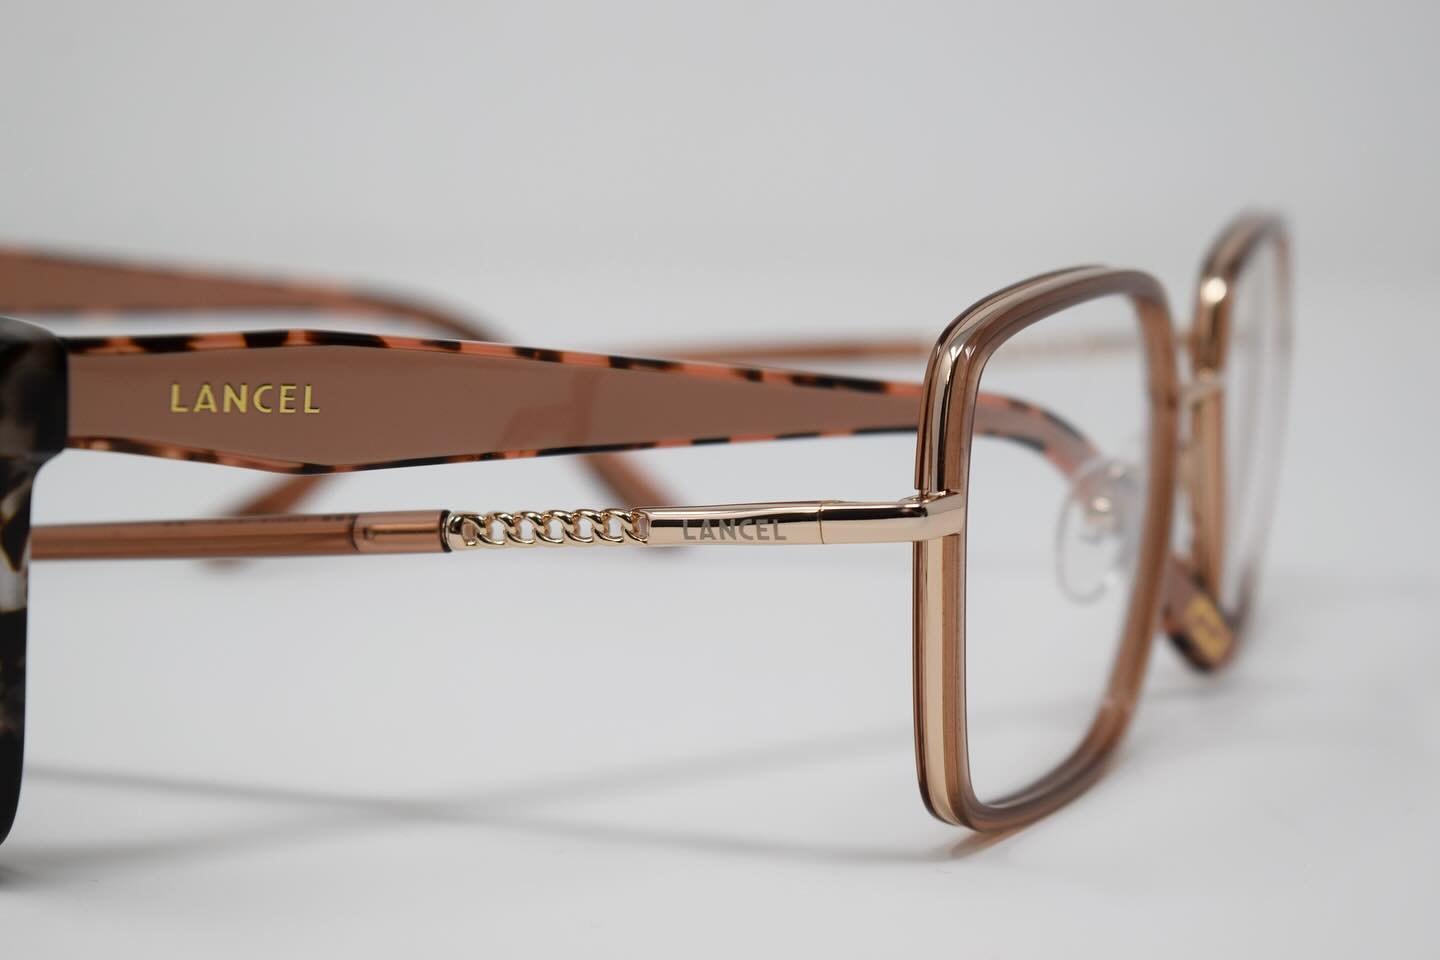 Experience the allure of our Lancel collection &ndash; where unique design meets undeniable attention-grabbing style. 

#Lancel #Eyewear #Fashion #Glasses #Paris  #EyewearWholesale